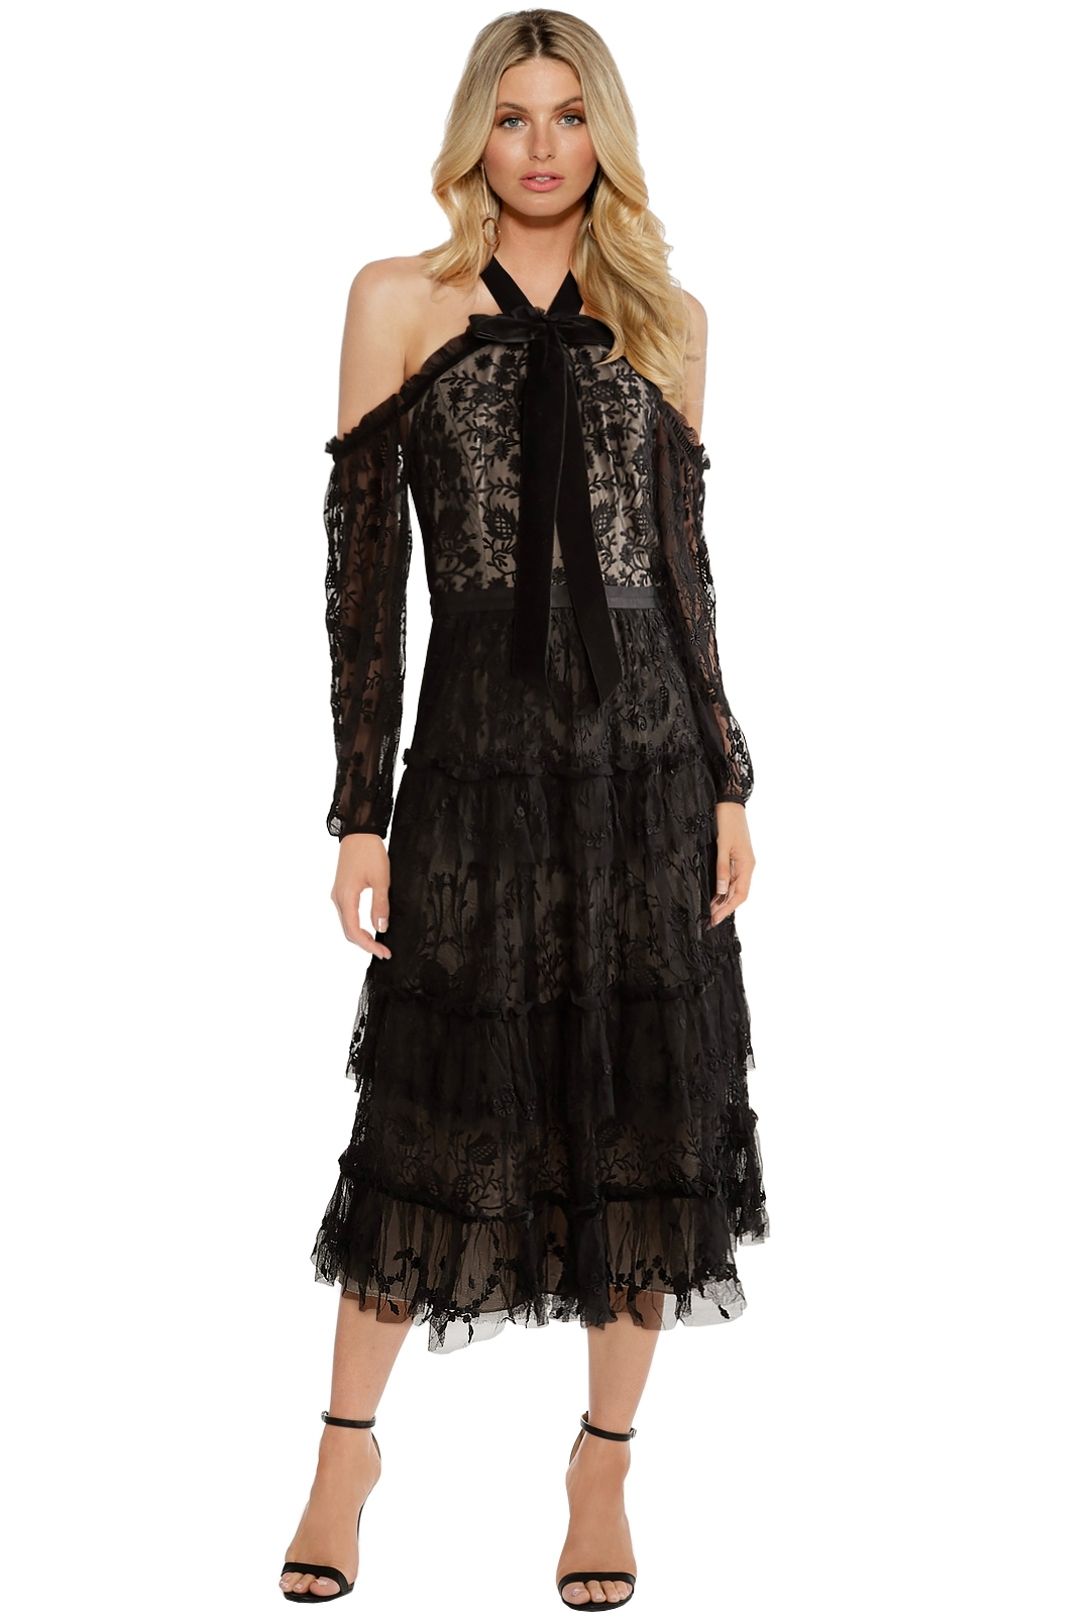 Needle & Thread - Primrose Dress - Black Lace - Front